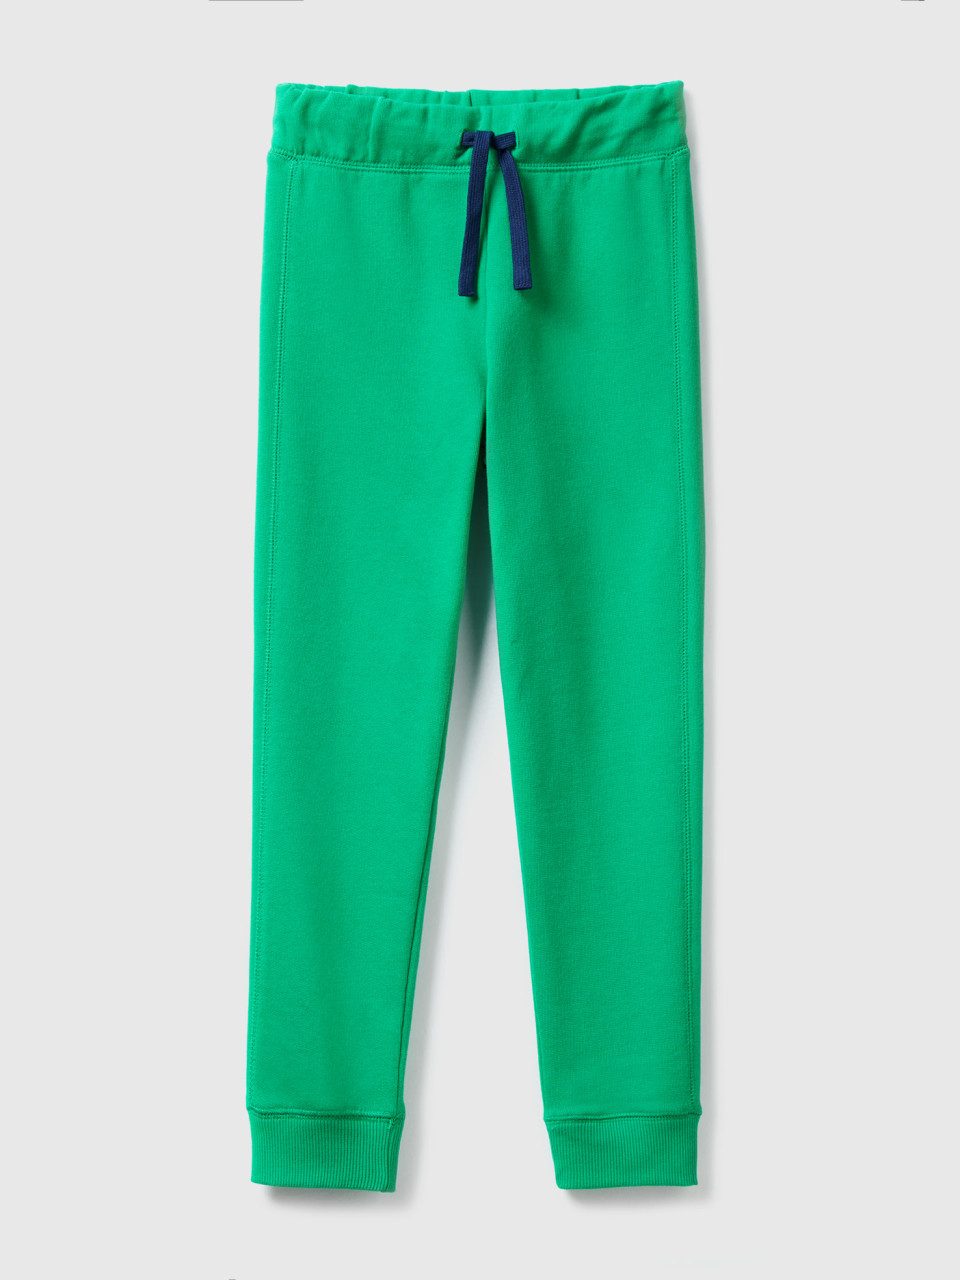 Benetton, 100% Cotton Sweatpants, Green, Kids